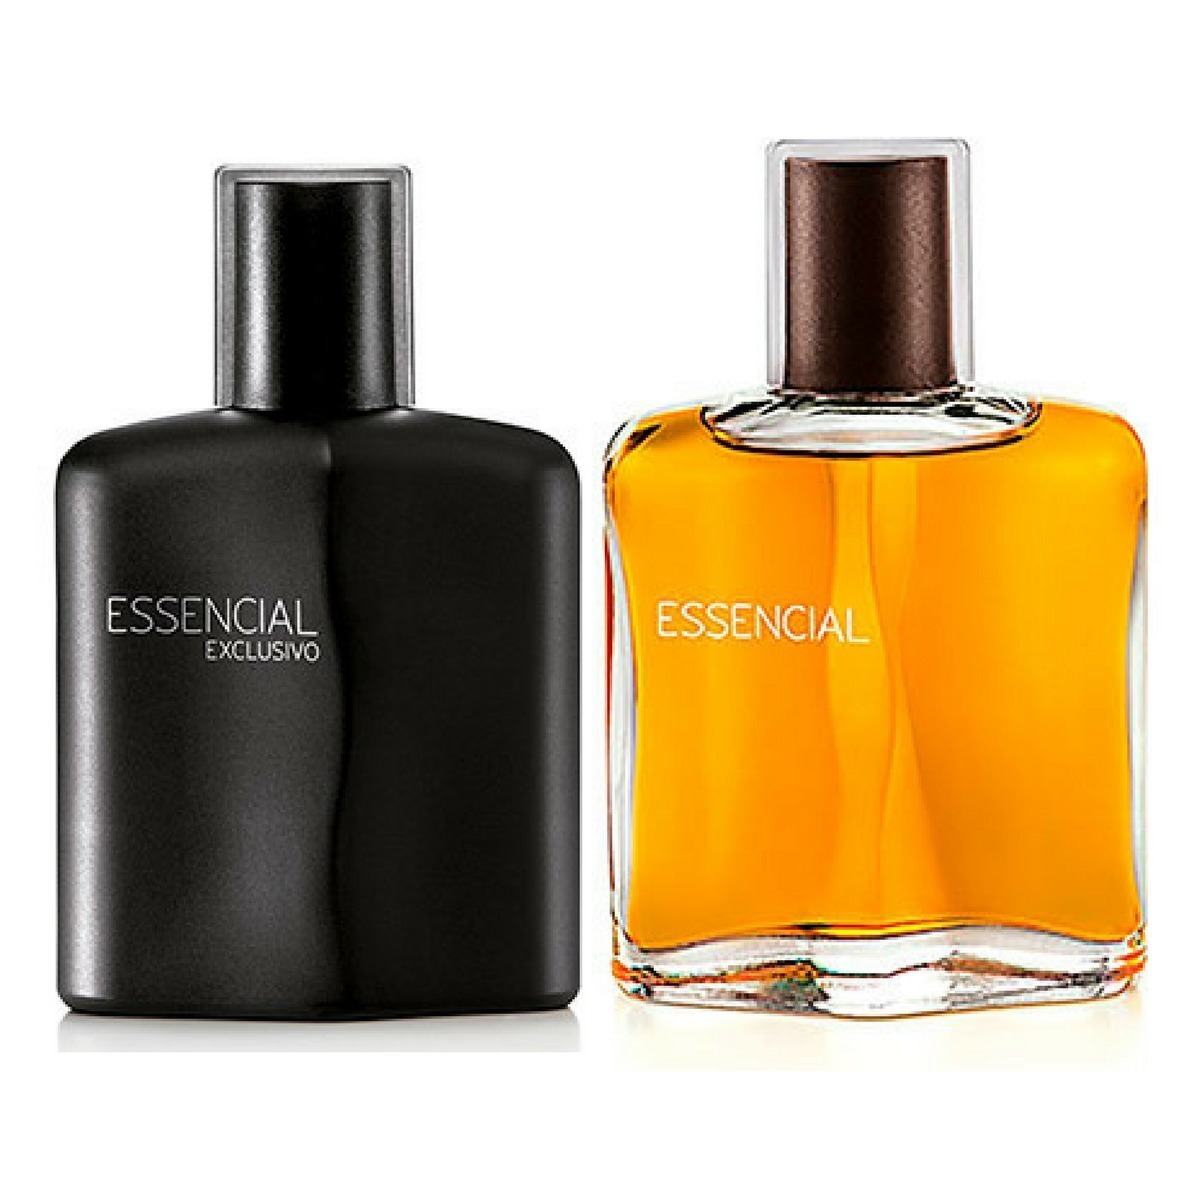 Deo Parfum Essencial Masculino - 100ml + Deo Parfum Essencial Exclusivo Masculino - 100ml